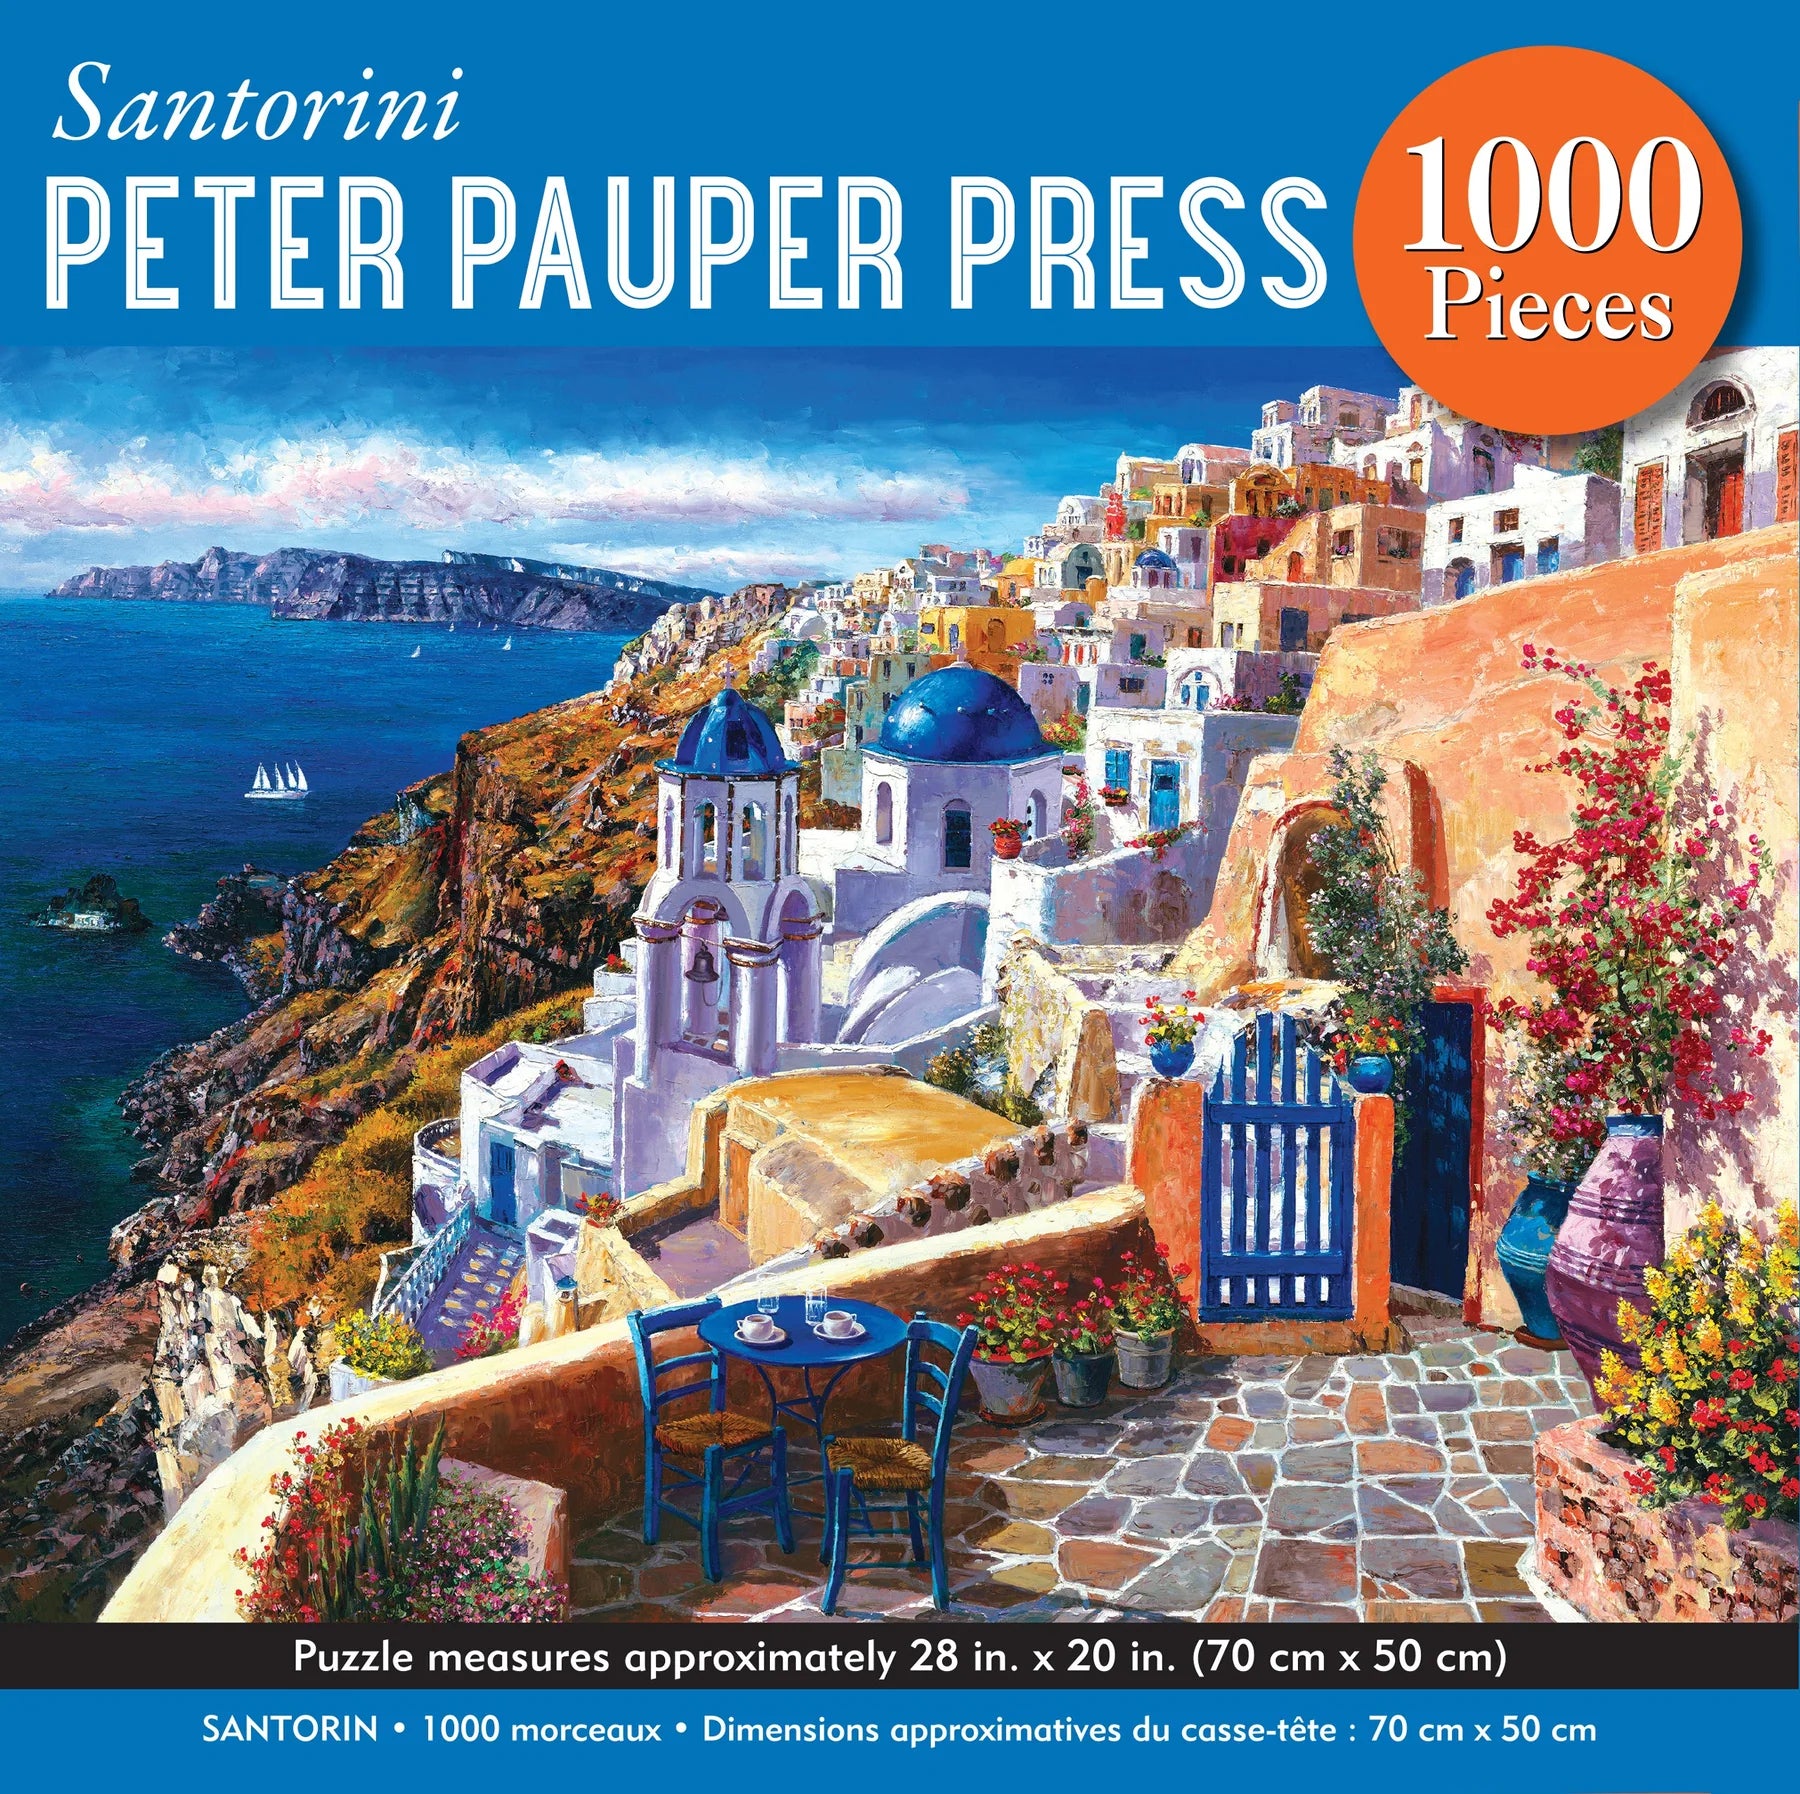 Santorini Puzzle (1000 Pieces)